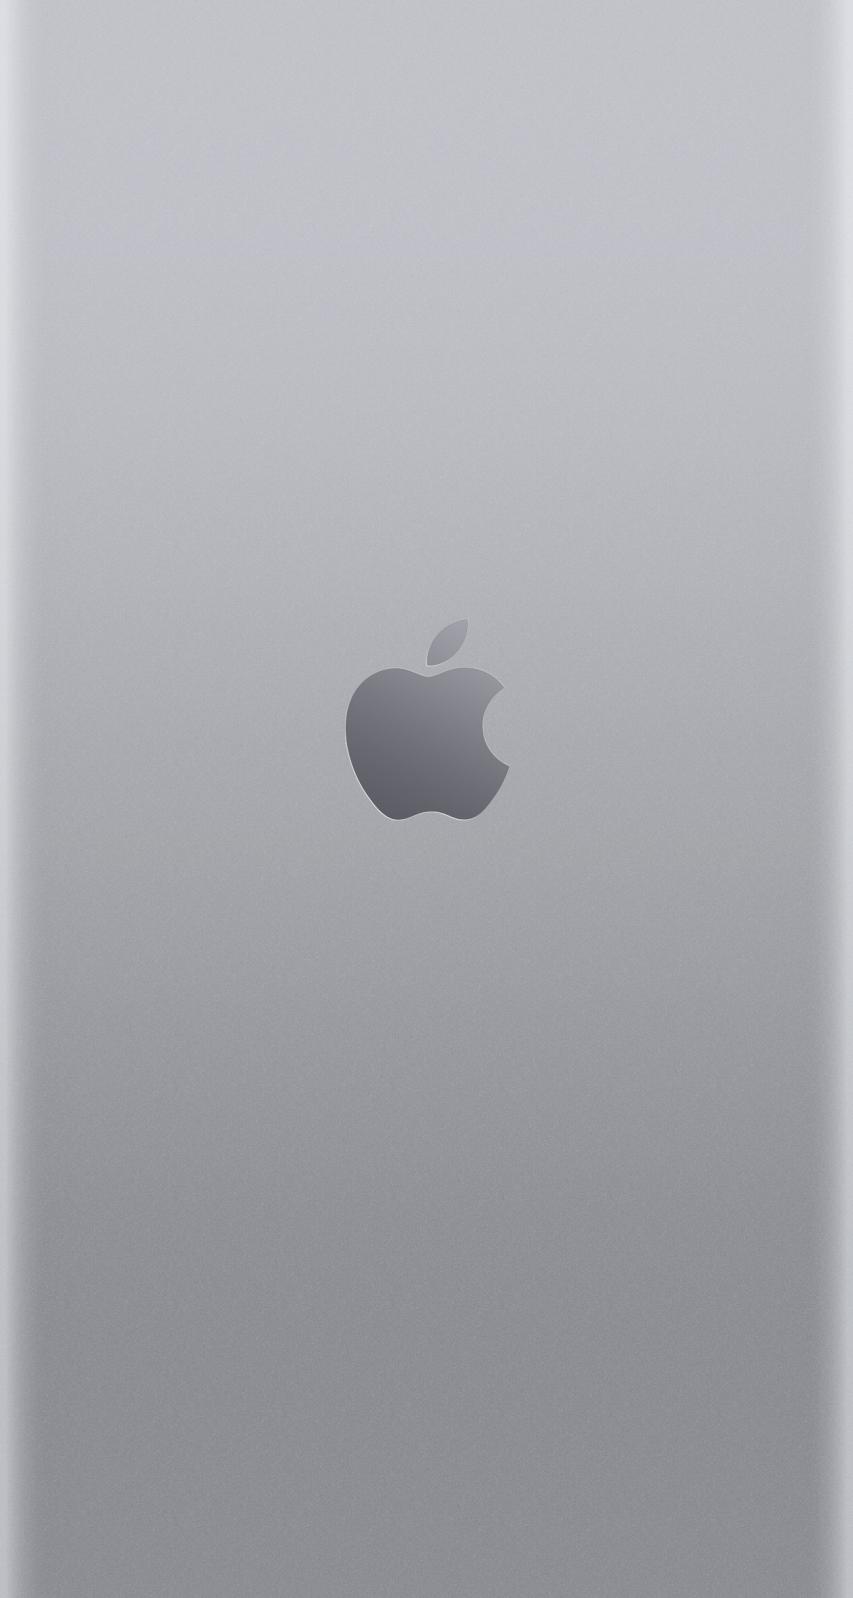 Apple iPhone 6 Beautiful Wallpaper hd download